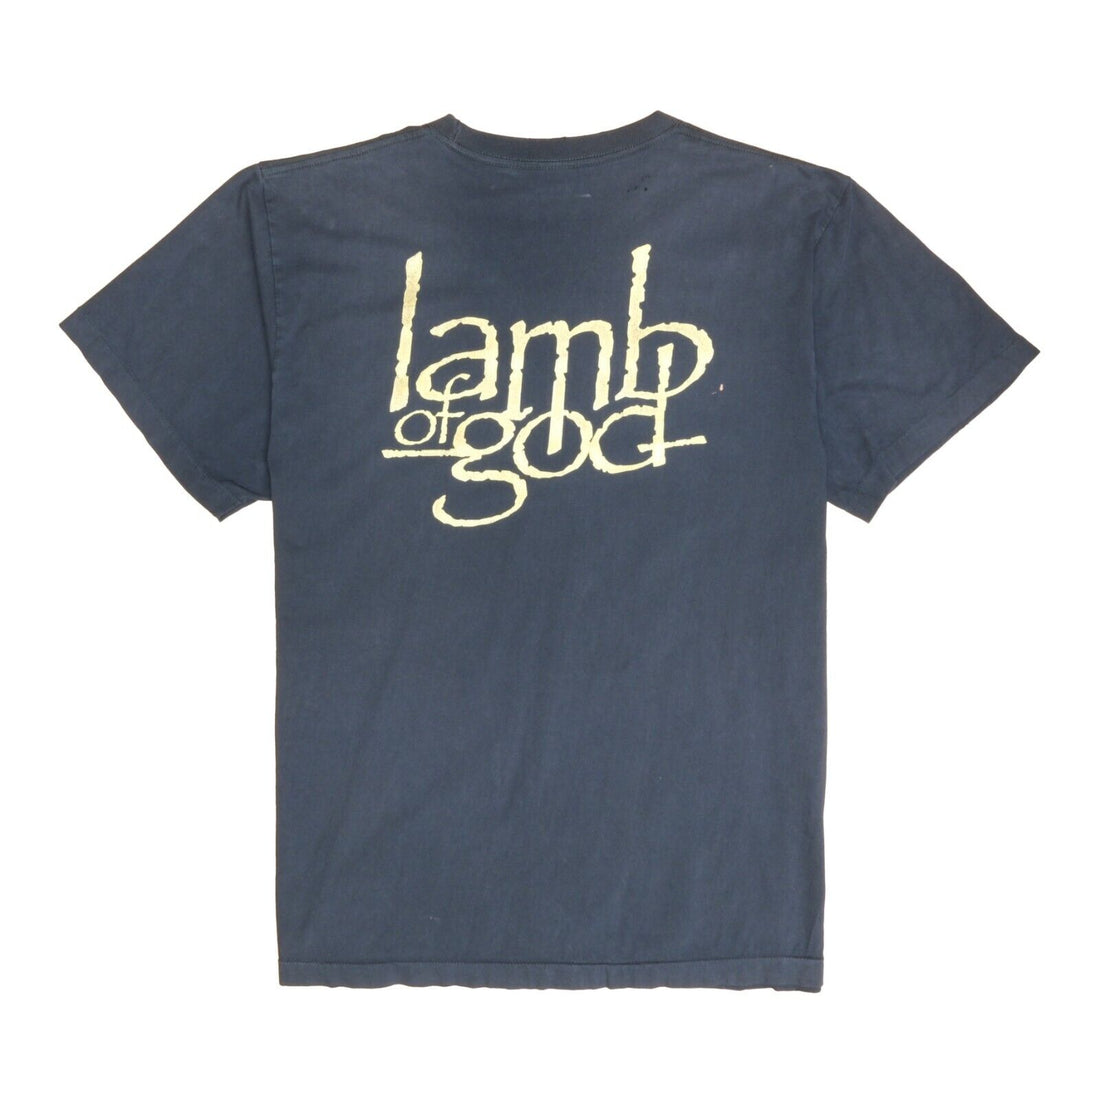 Lamb Of God Sacrament T-Shirt Size 2XL Band Tee